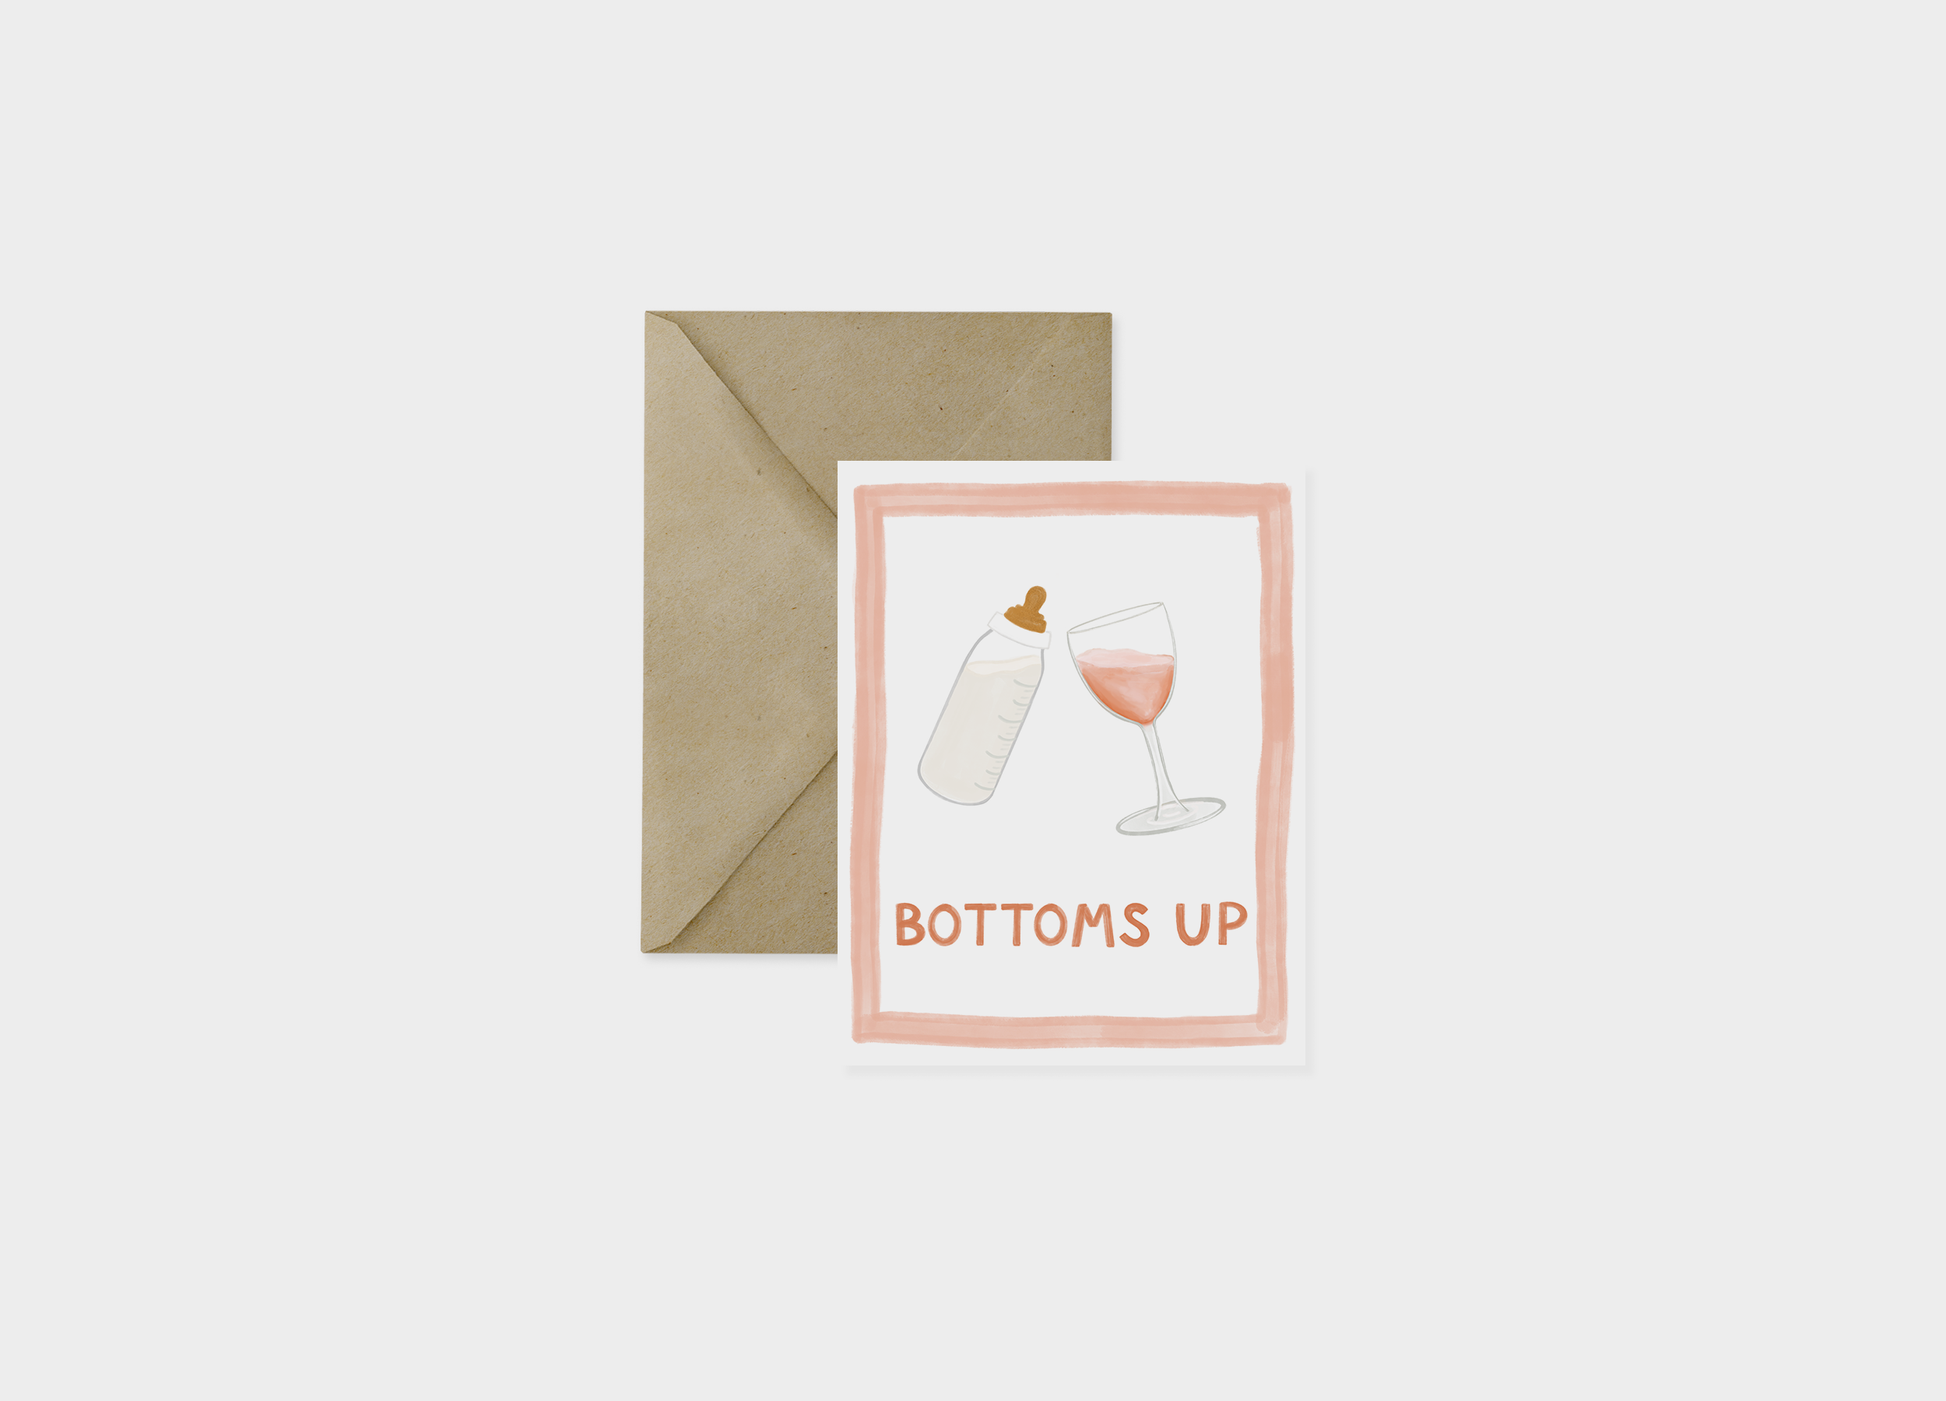 Bottoms Up Baby Greeting Card - Baby shower gender neutral – Lauren Felice